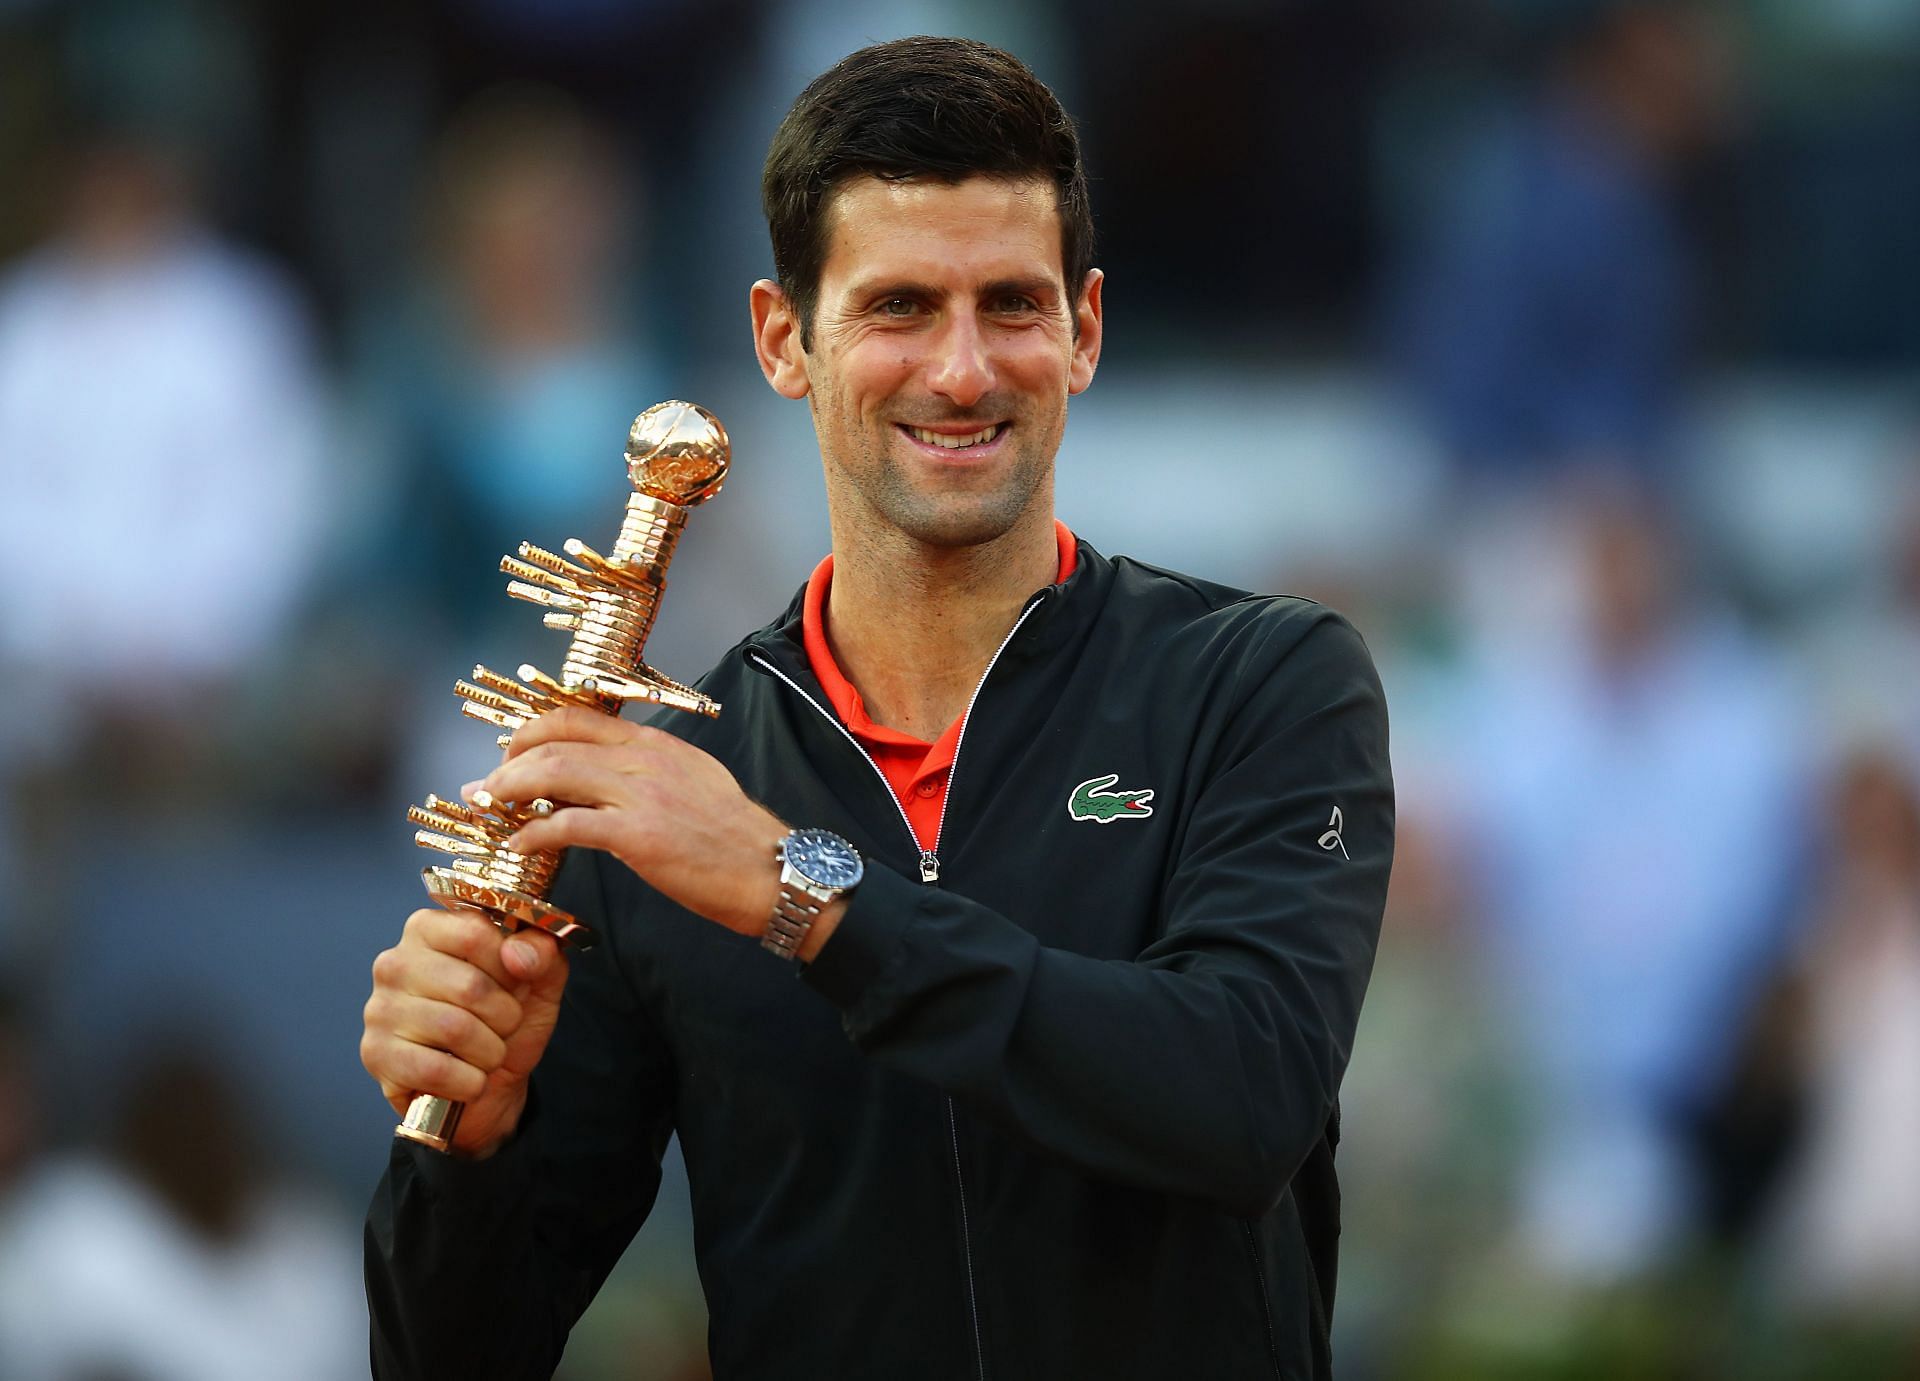 Novak Djokovic at the 2019 Madrid Open.